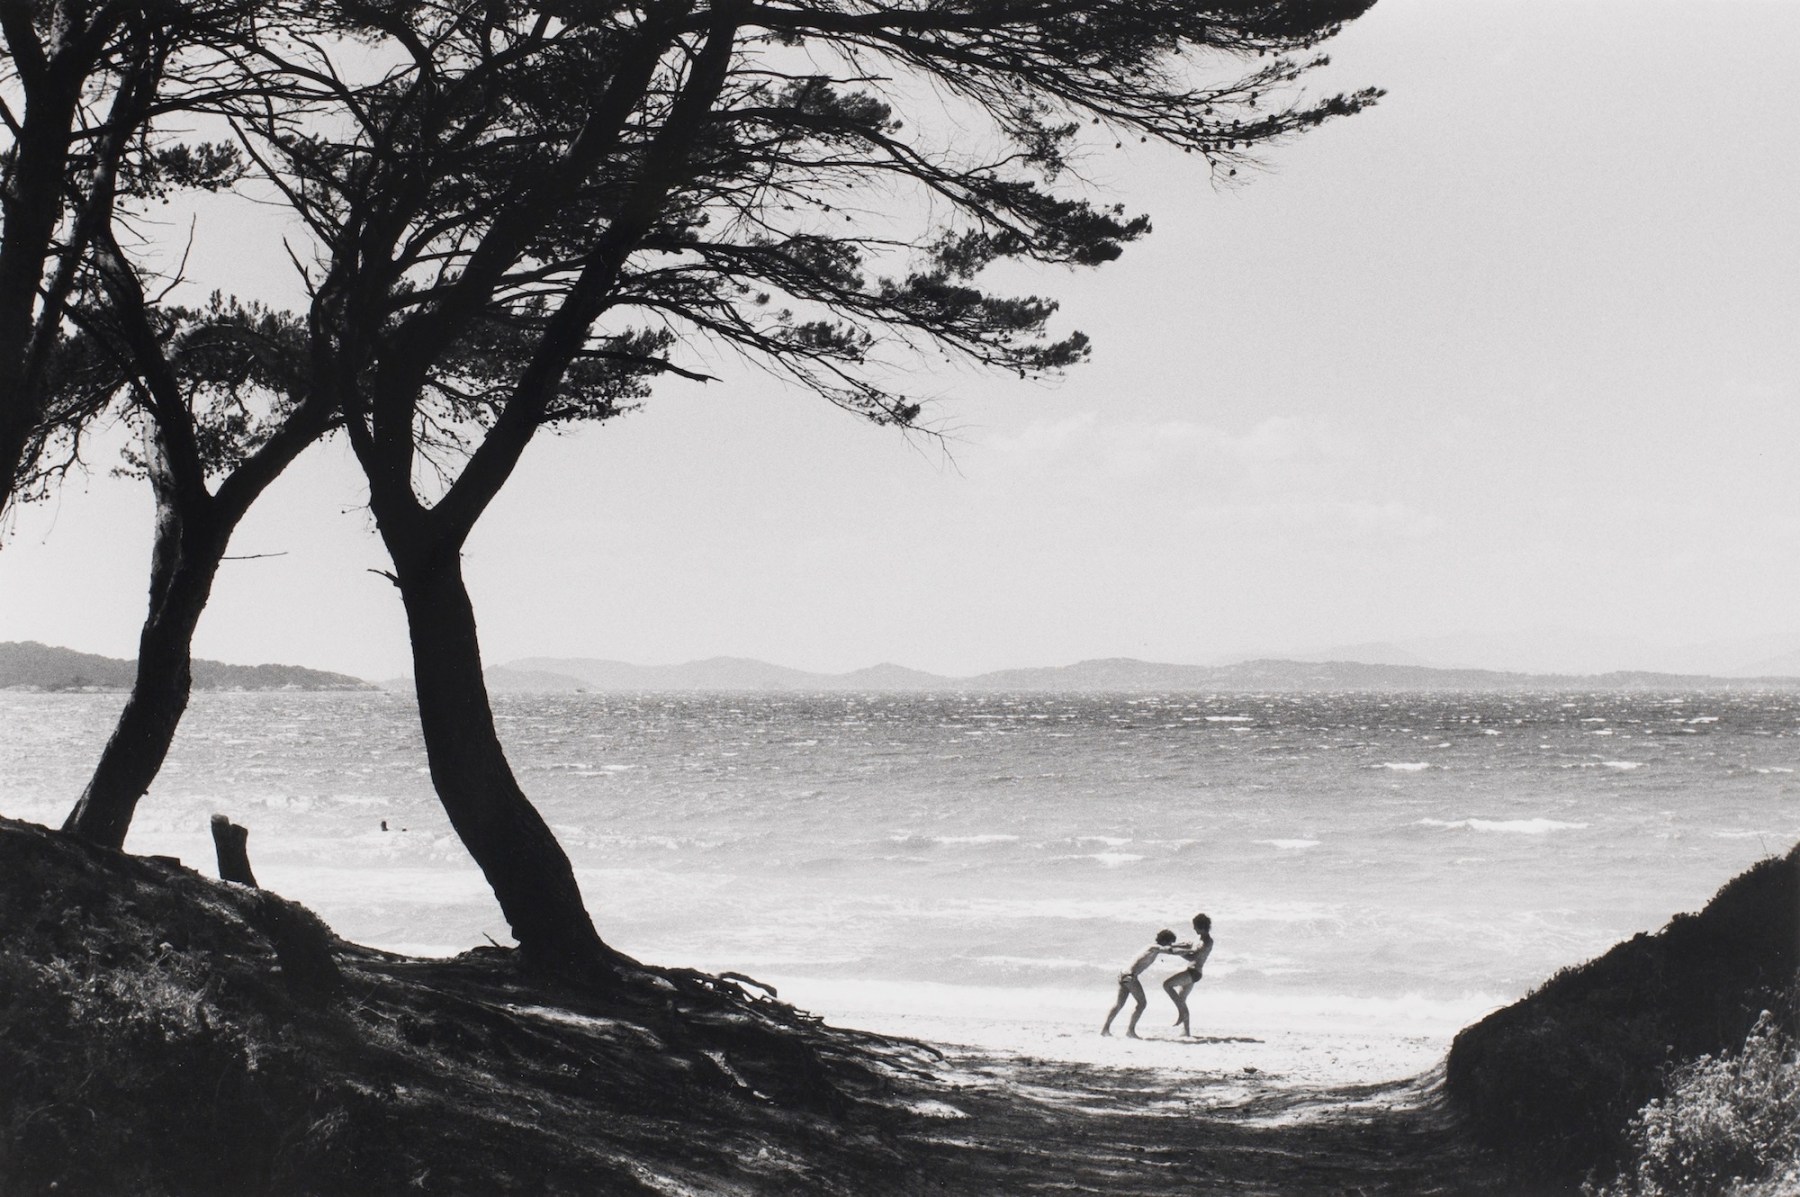 Bernard Plossu (1945-)  Untitled (Playing on beach, two trees), n.d.  Gelatin silver print  12 x 16 inches (paper), black and white photography black and white photography